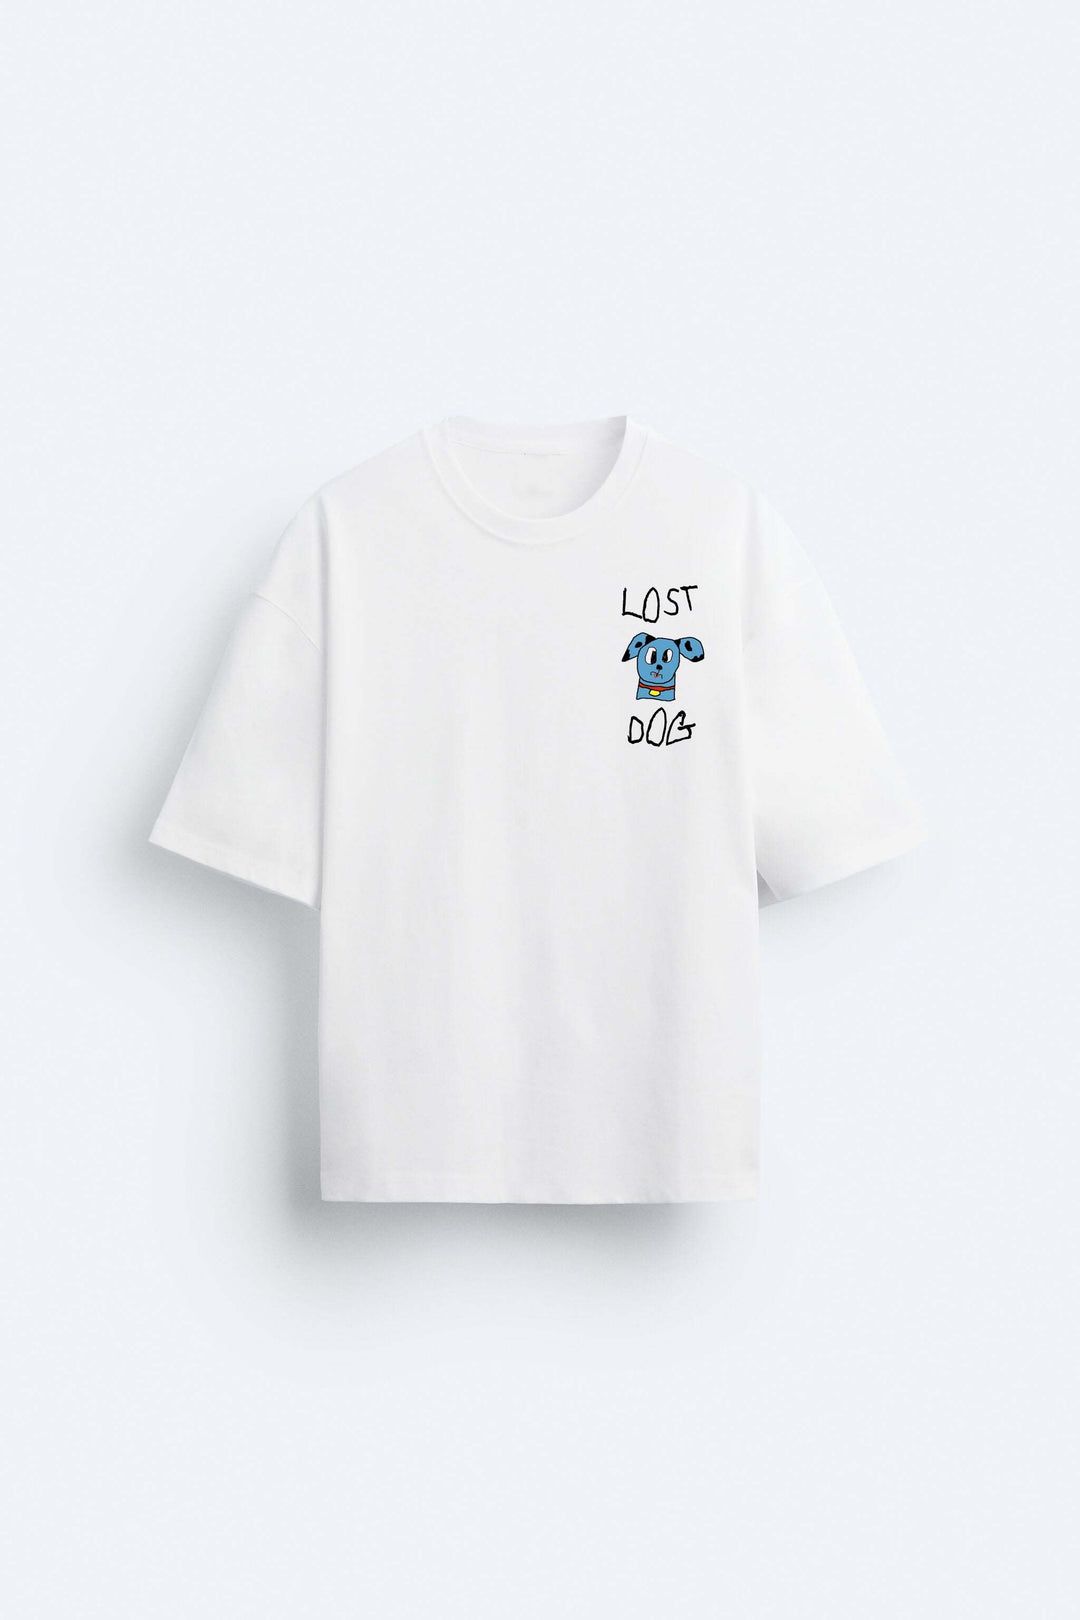 Garm Island Lost Dog T-shirt in white